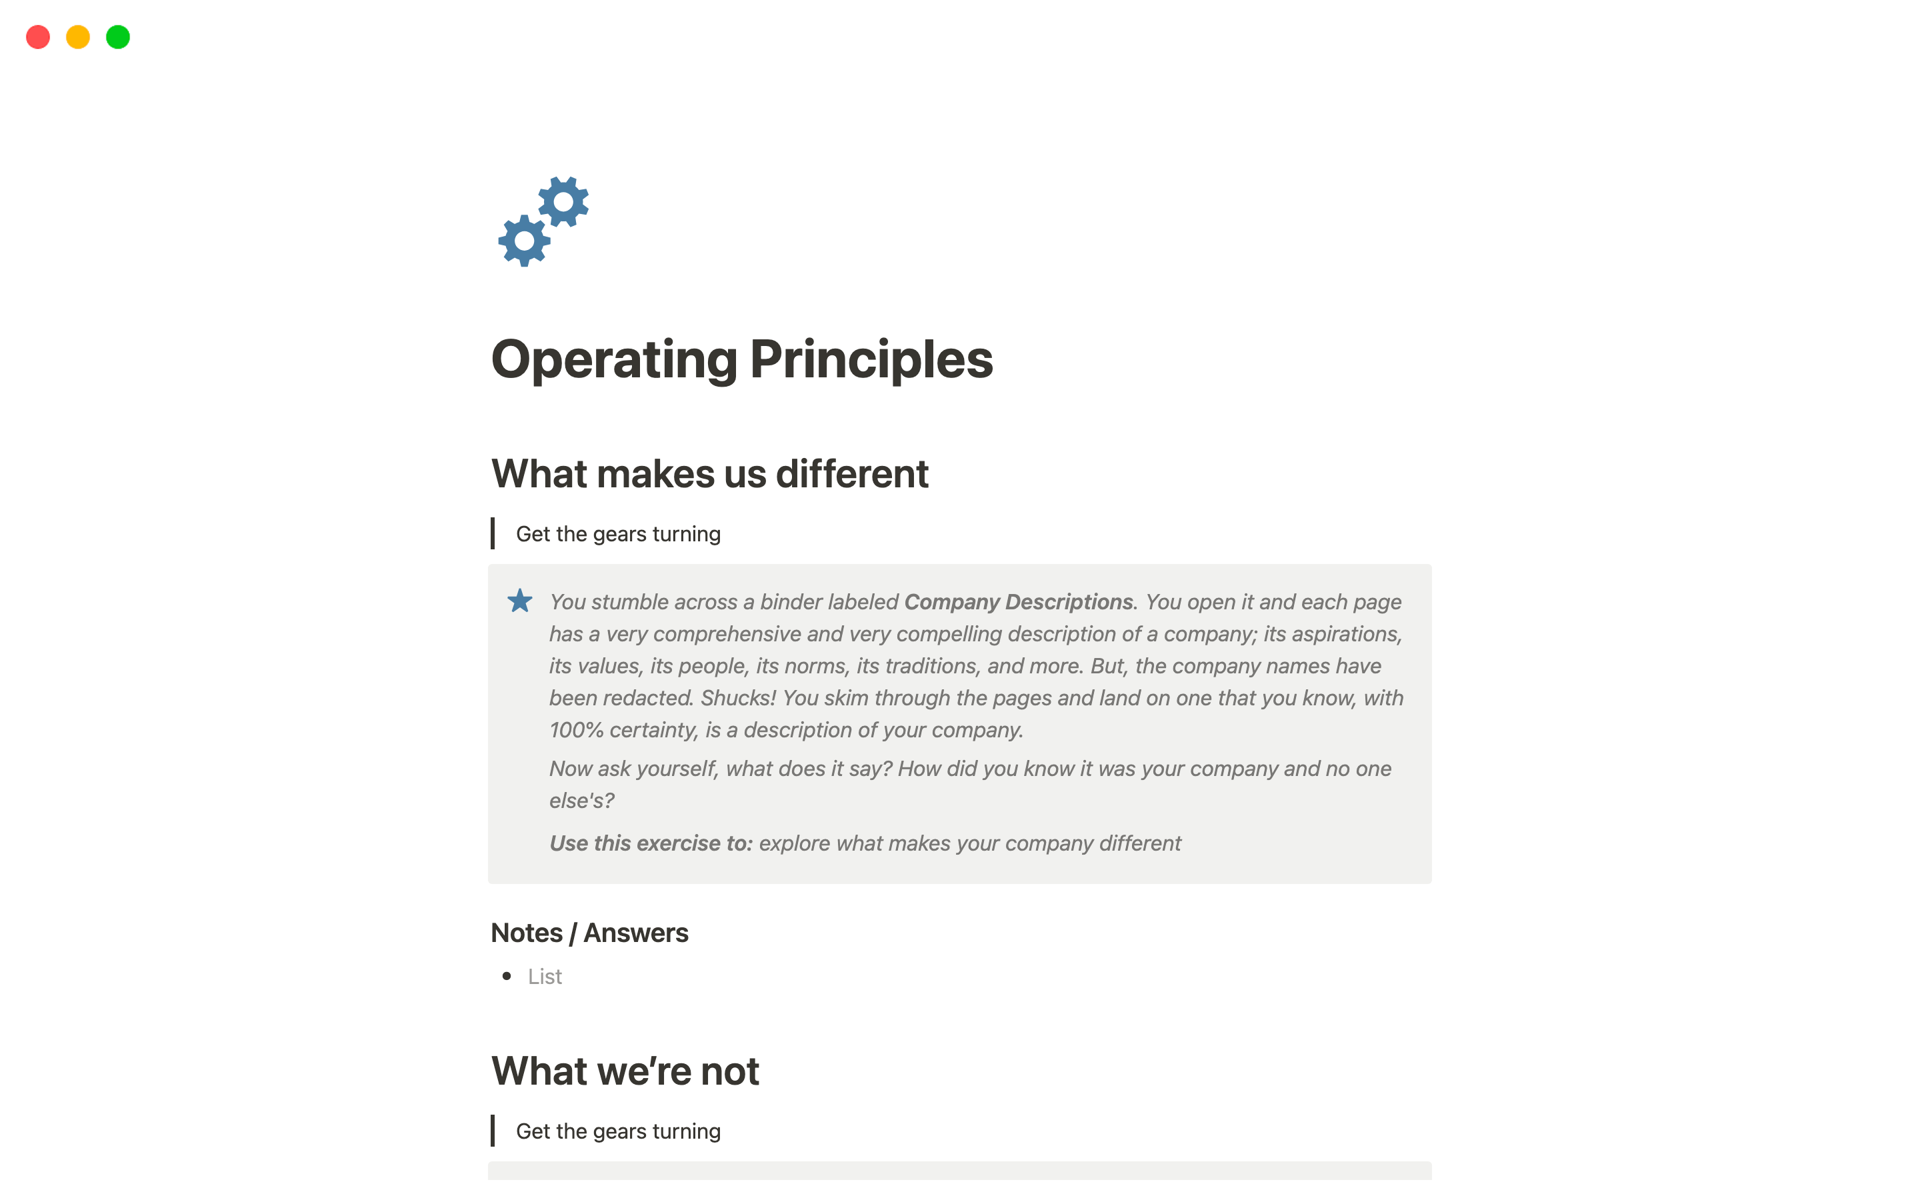 Aperçu du modèle de Operating Principles